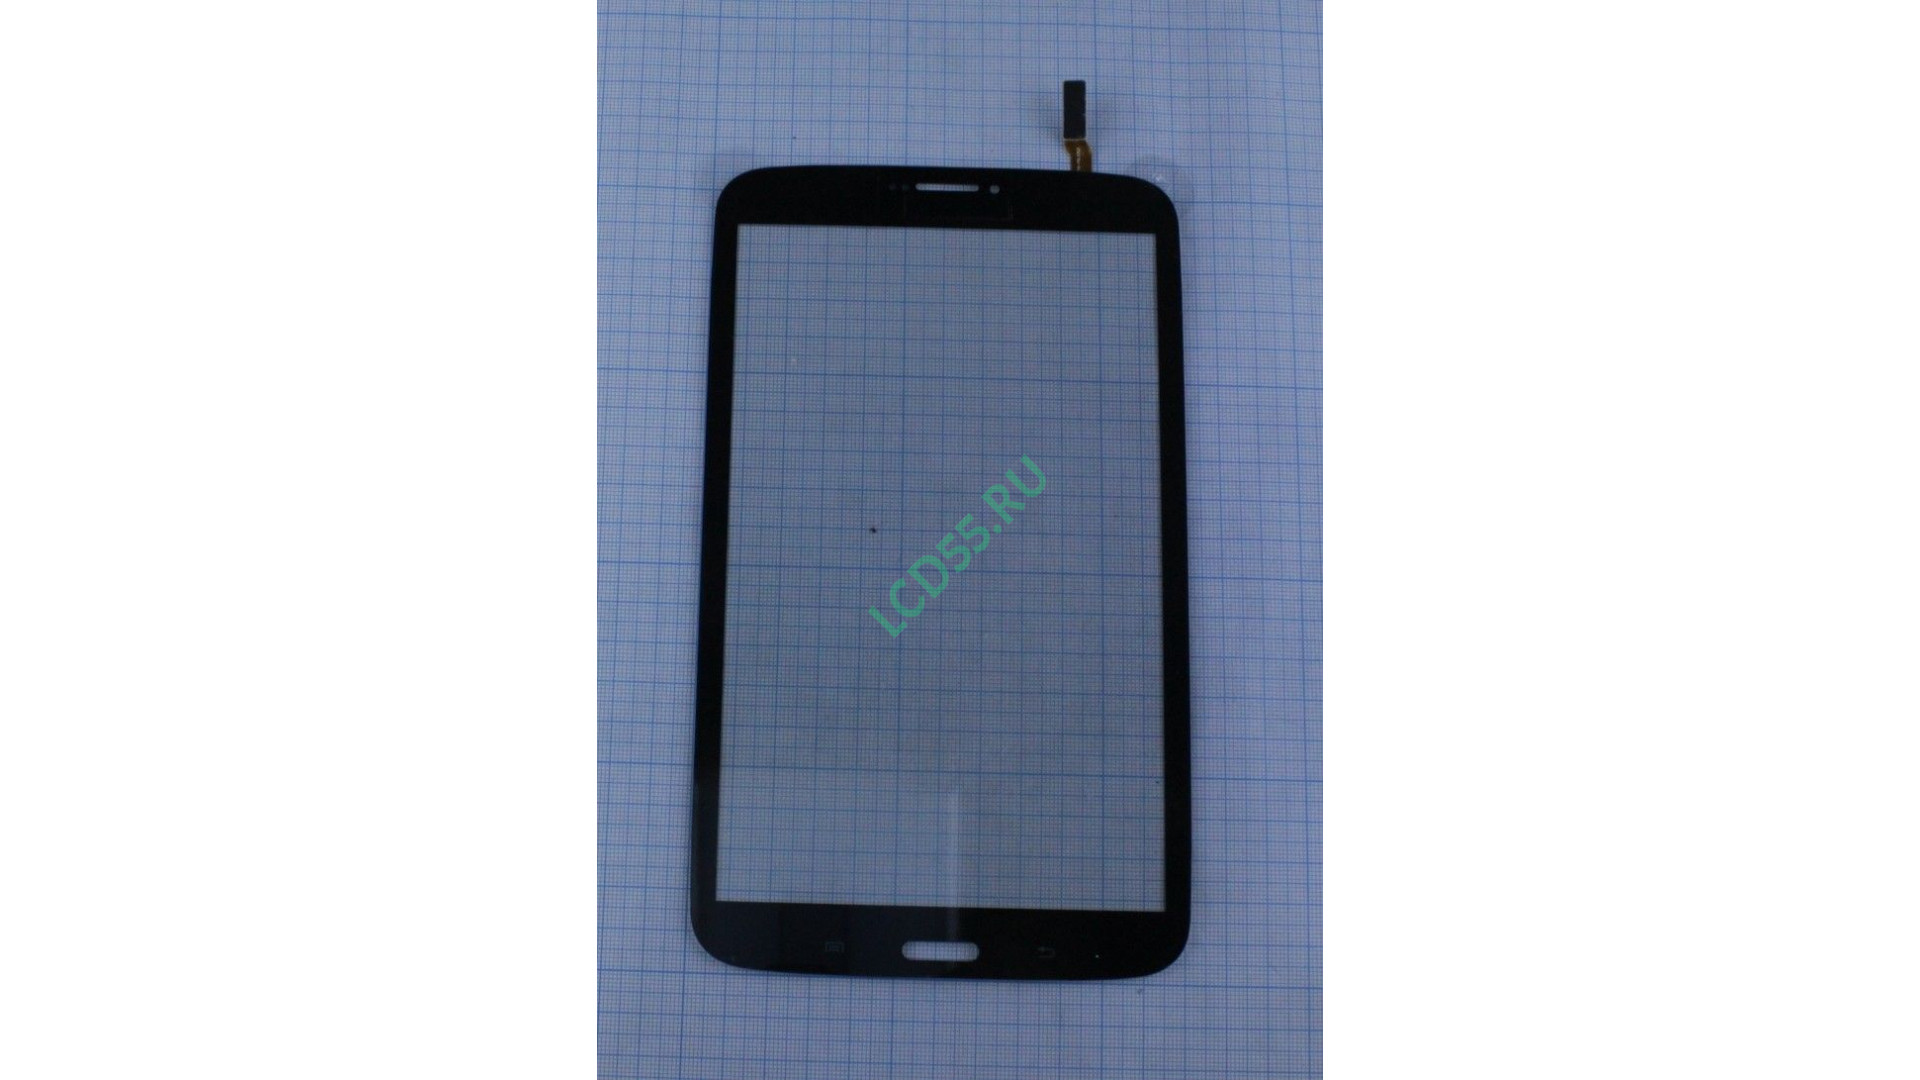 Samsung Galaxy Tab 3 8.0 SM-T311, черный